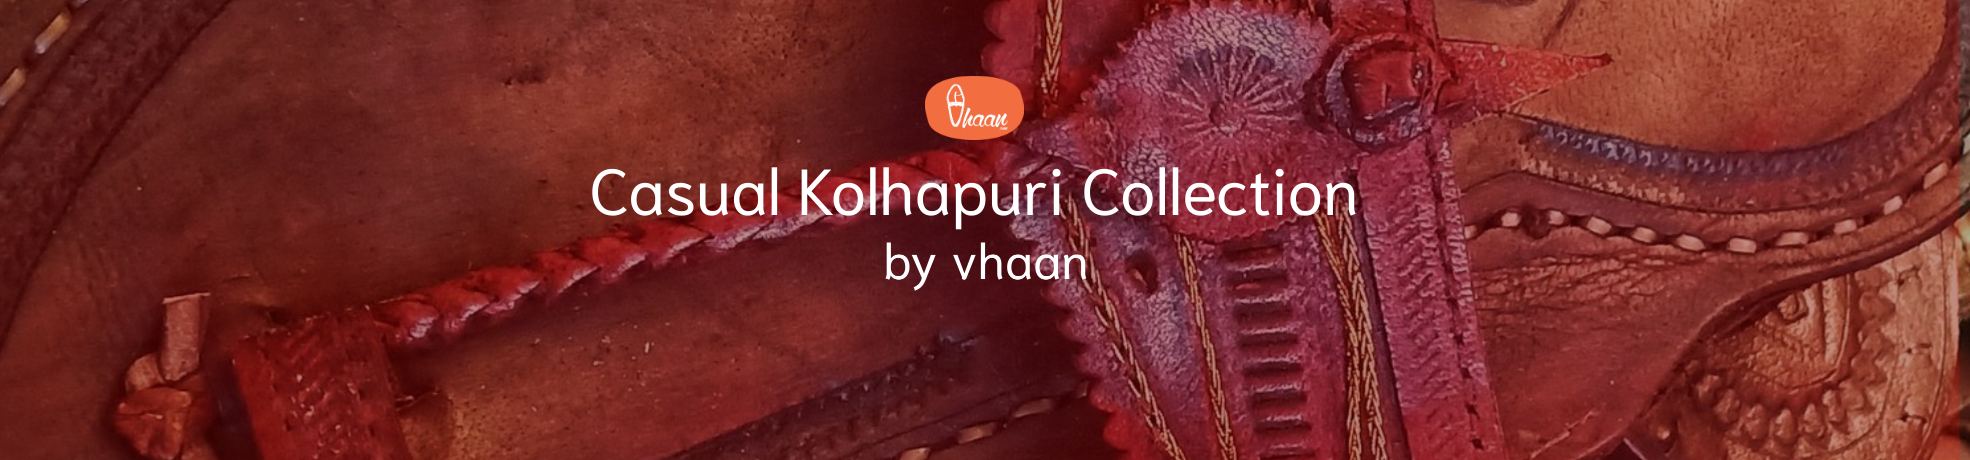 Casual Kolhapuri Collection